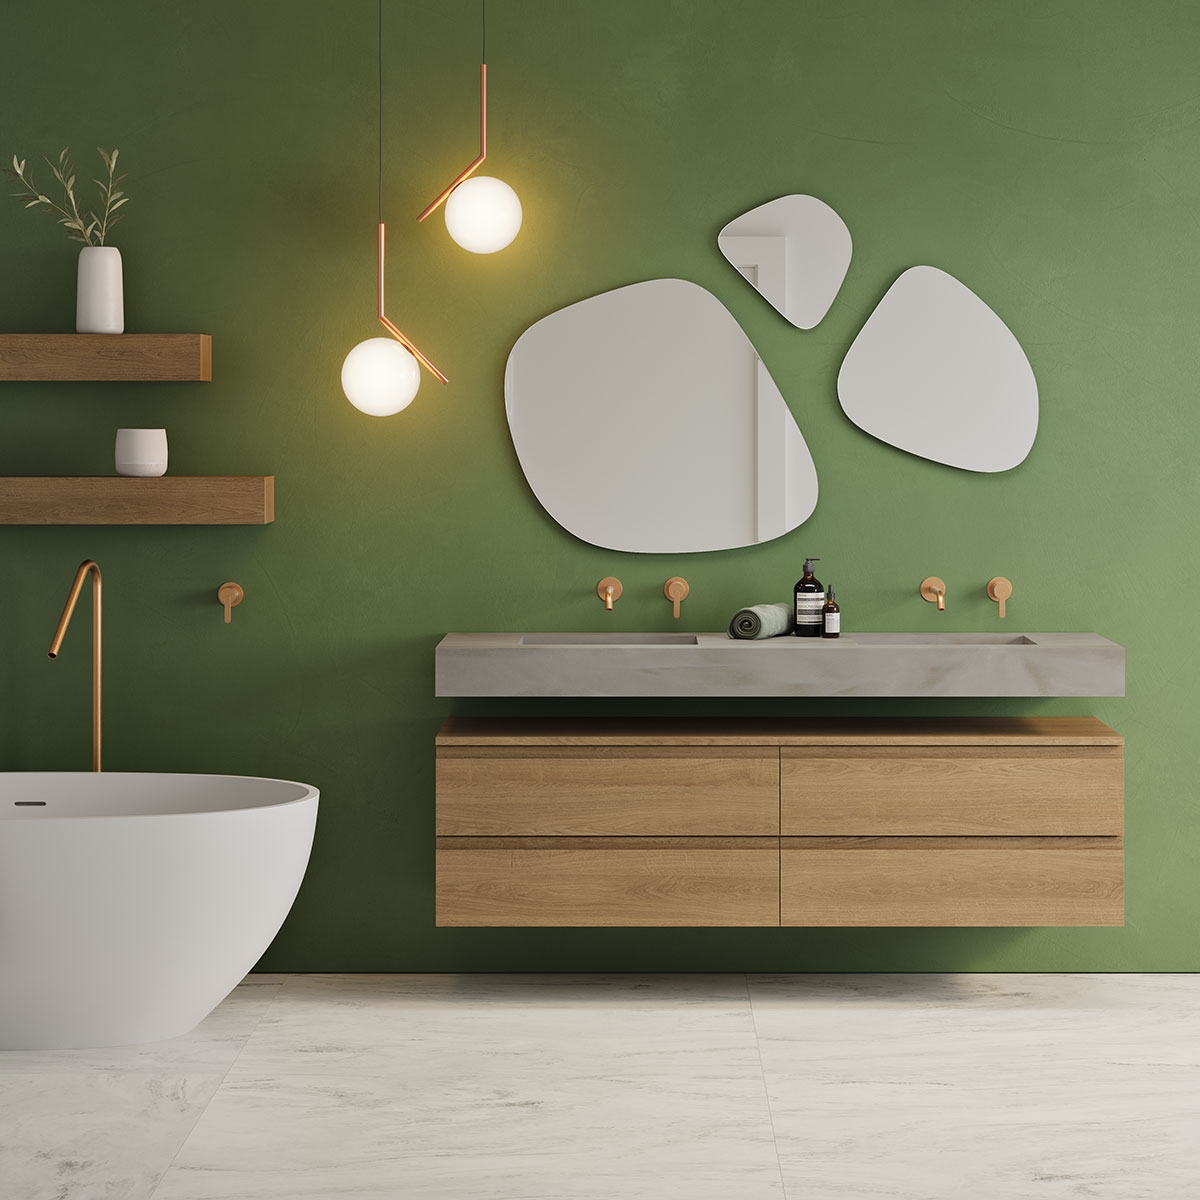 decorative-bathroom-mirror-interior-design